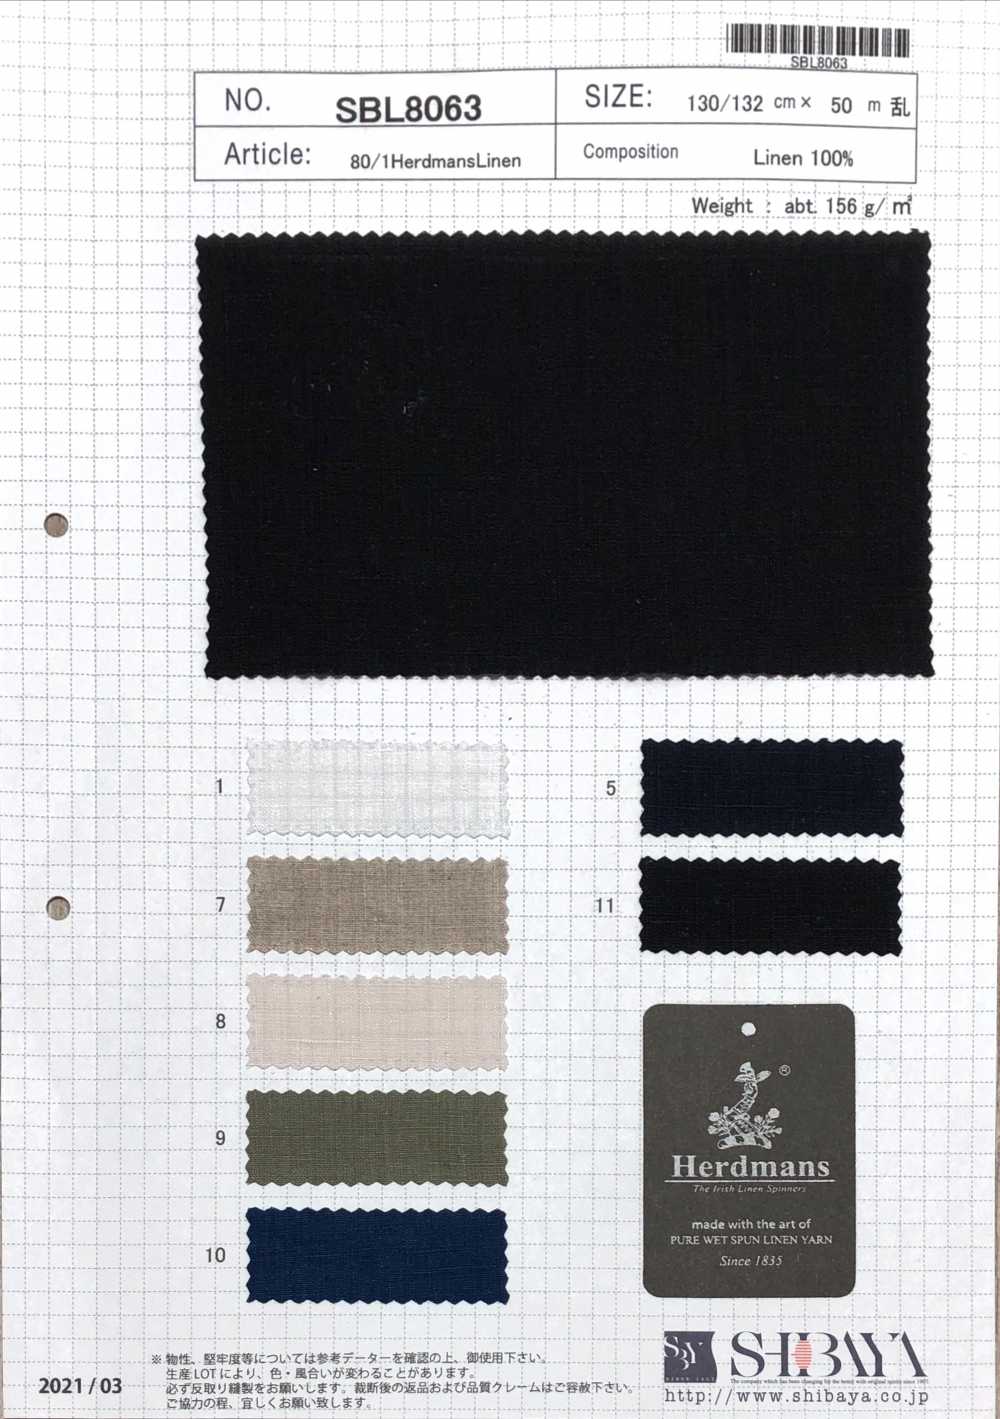 SBL8063 80/1 Hardmans Leinen[Textilgewebe] SHIBAYA